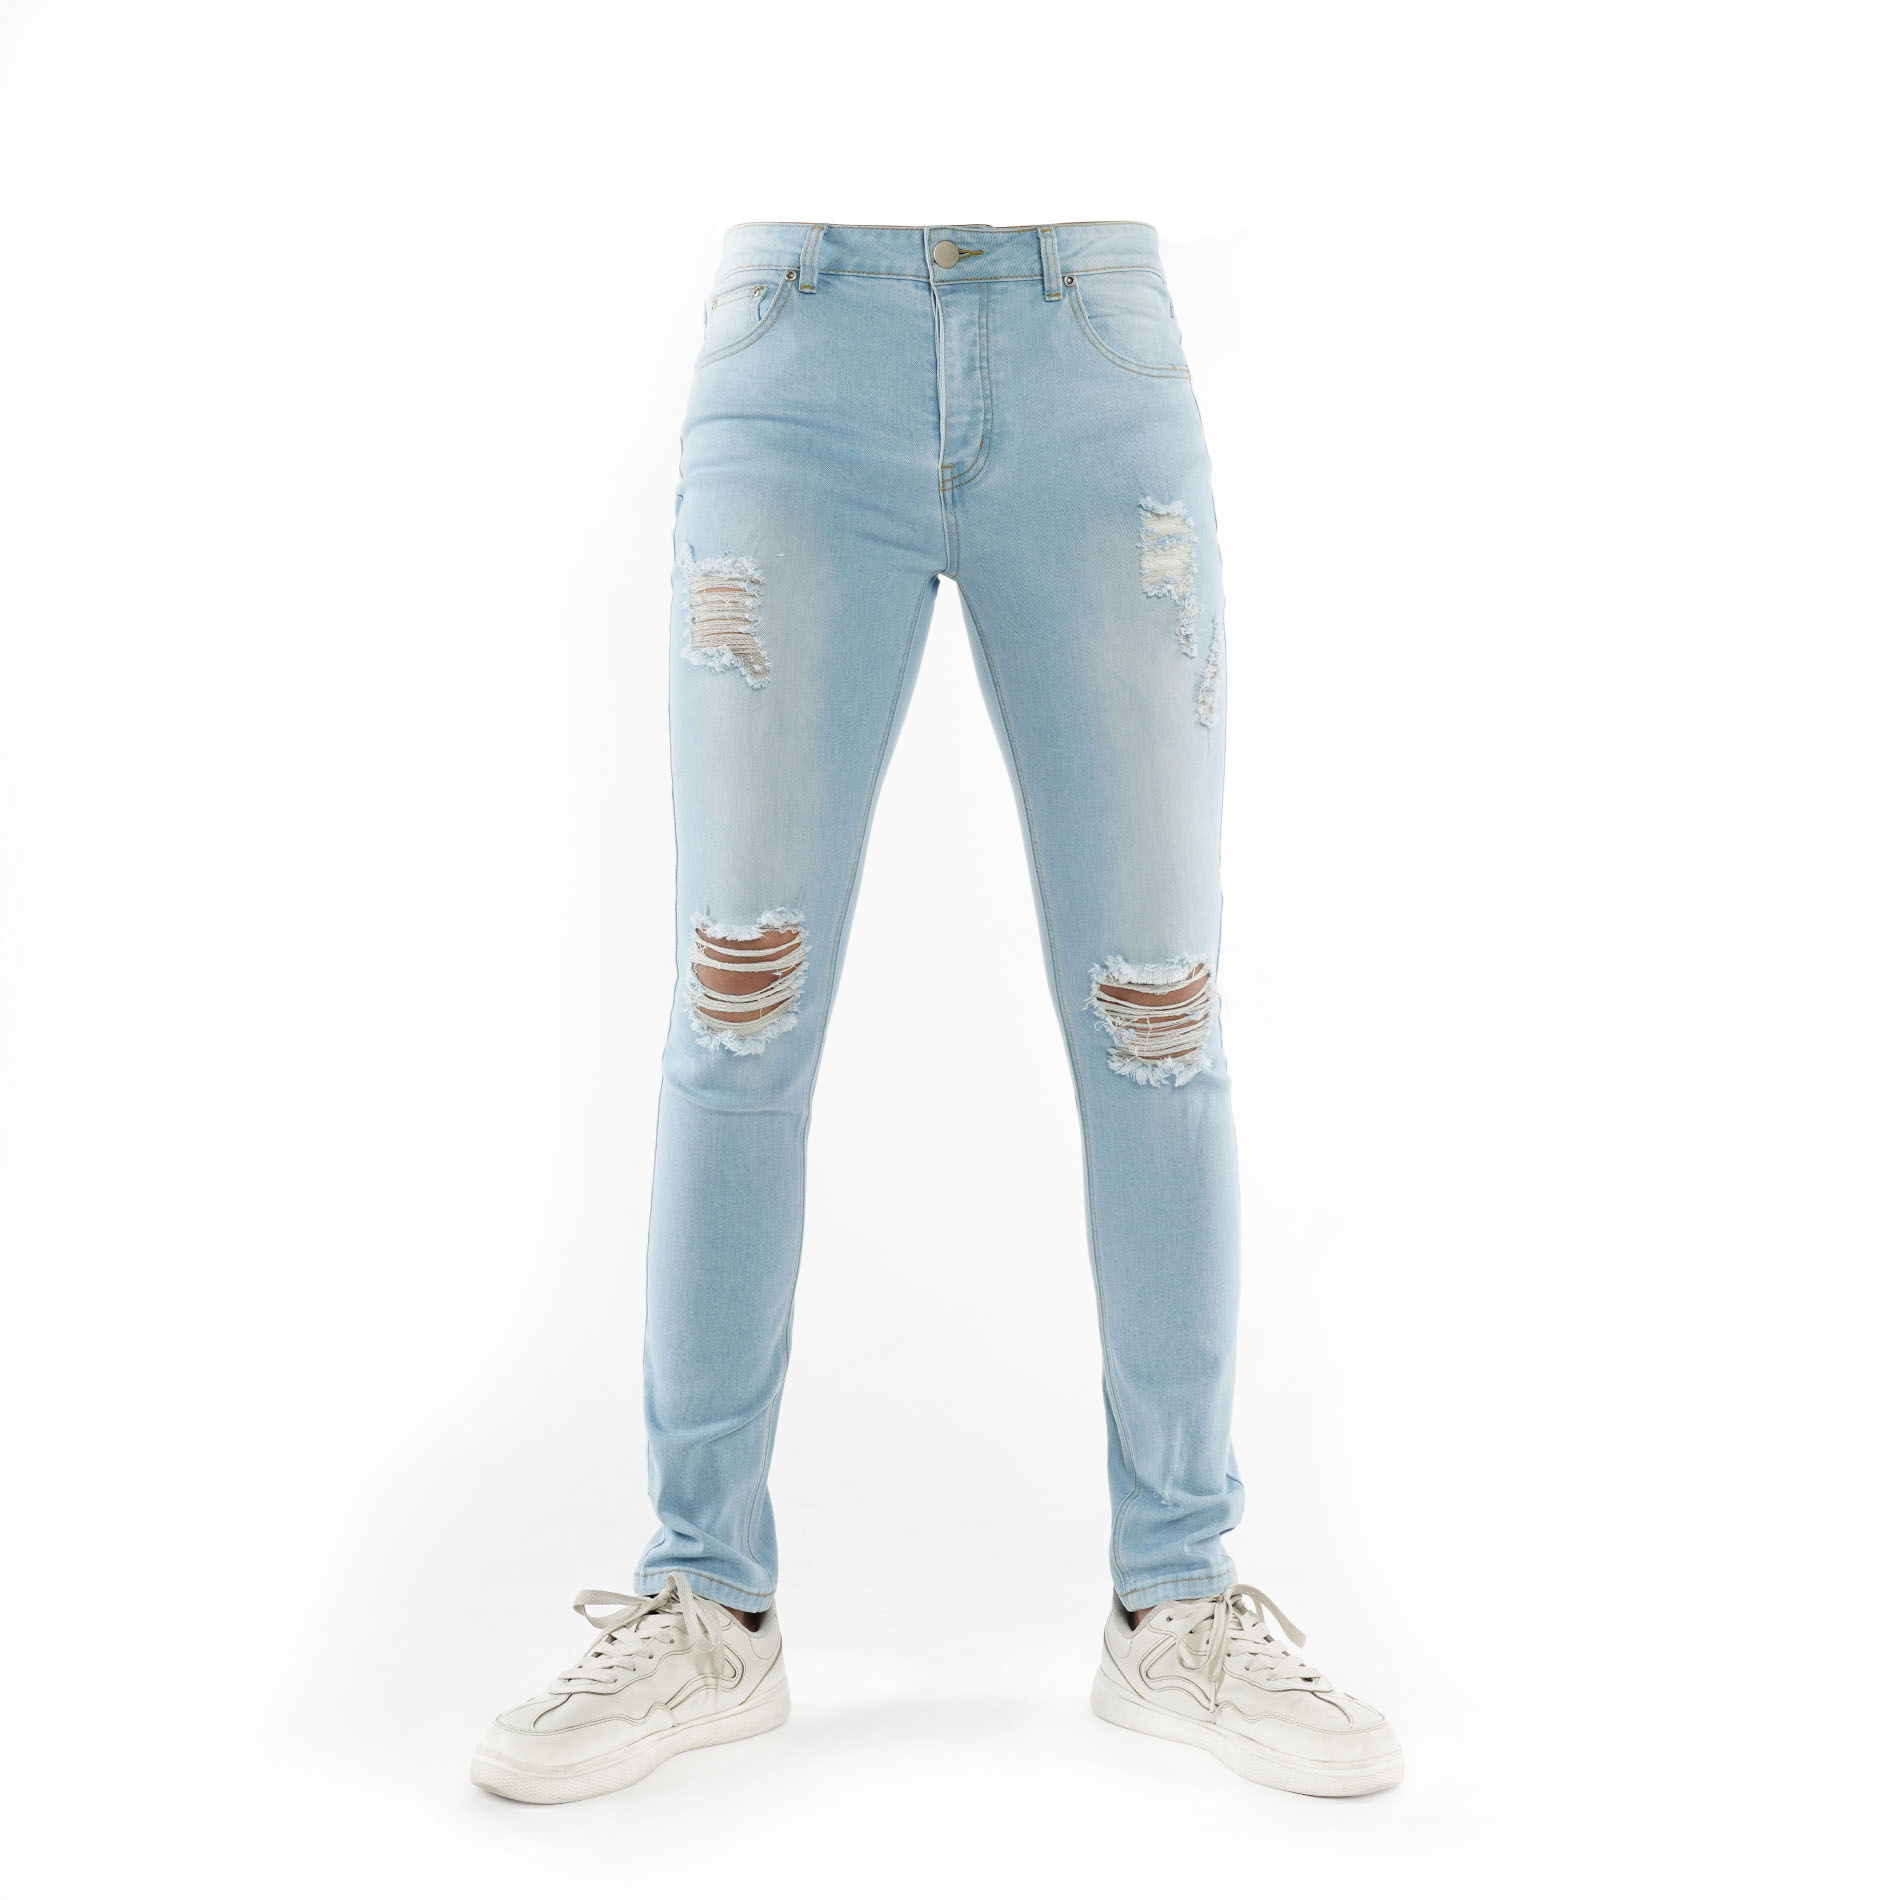 2020 most popular men's skinny jeans light blue ripped jeans